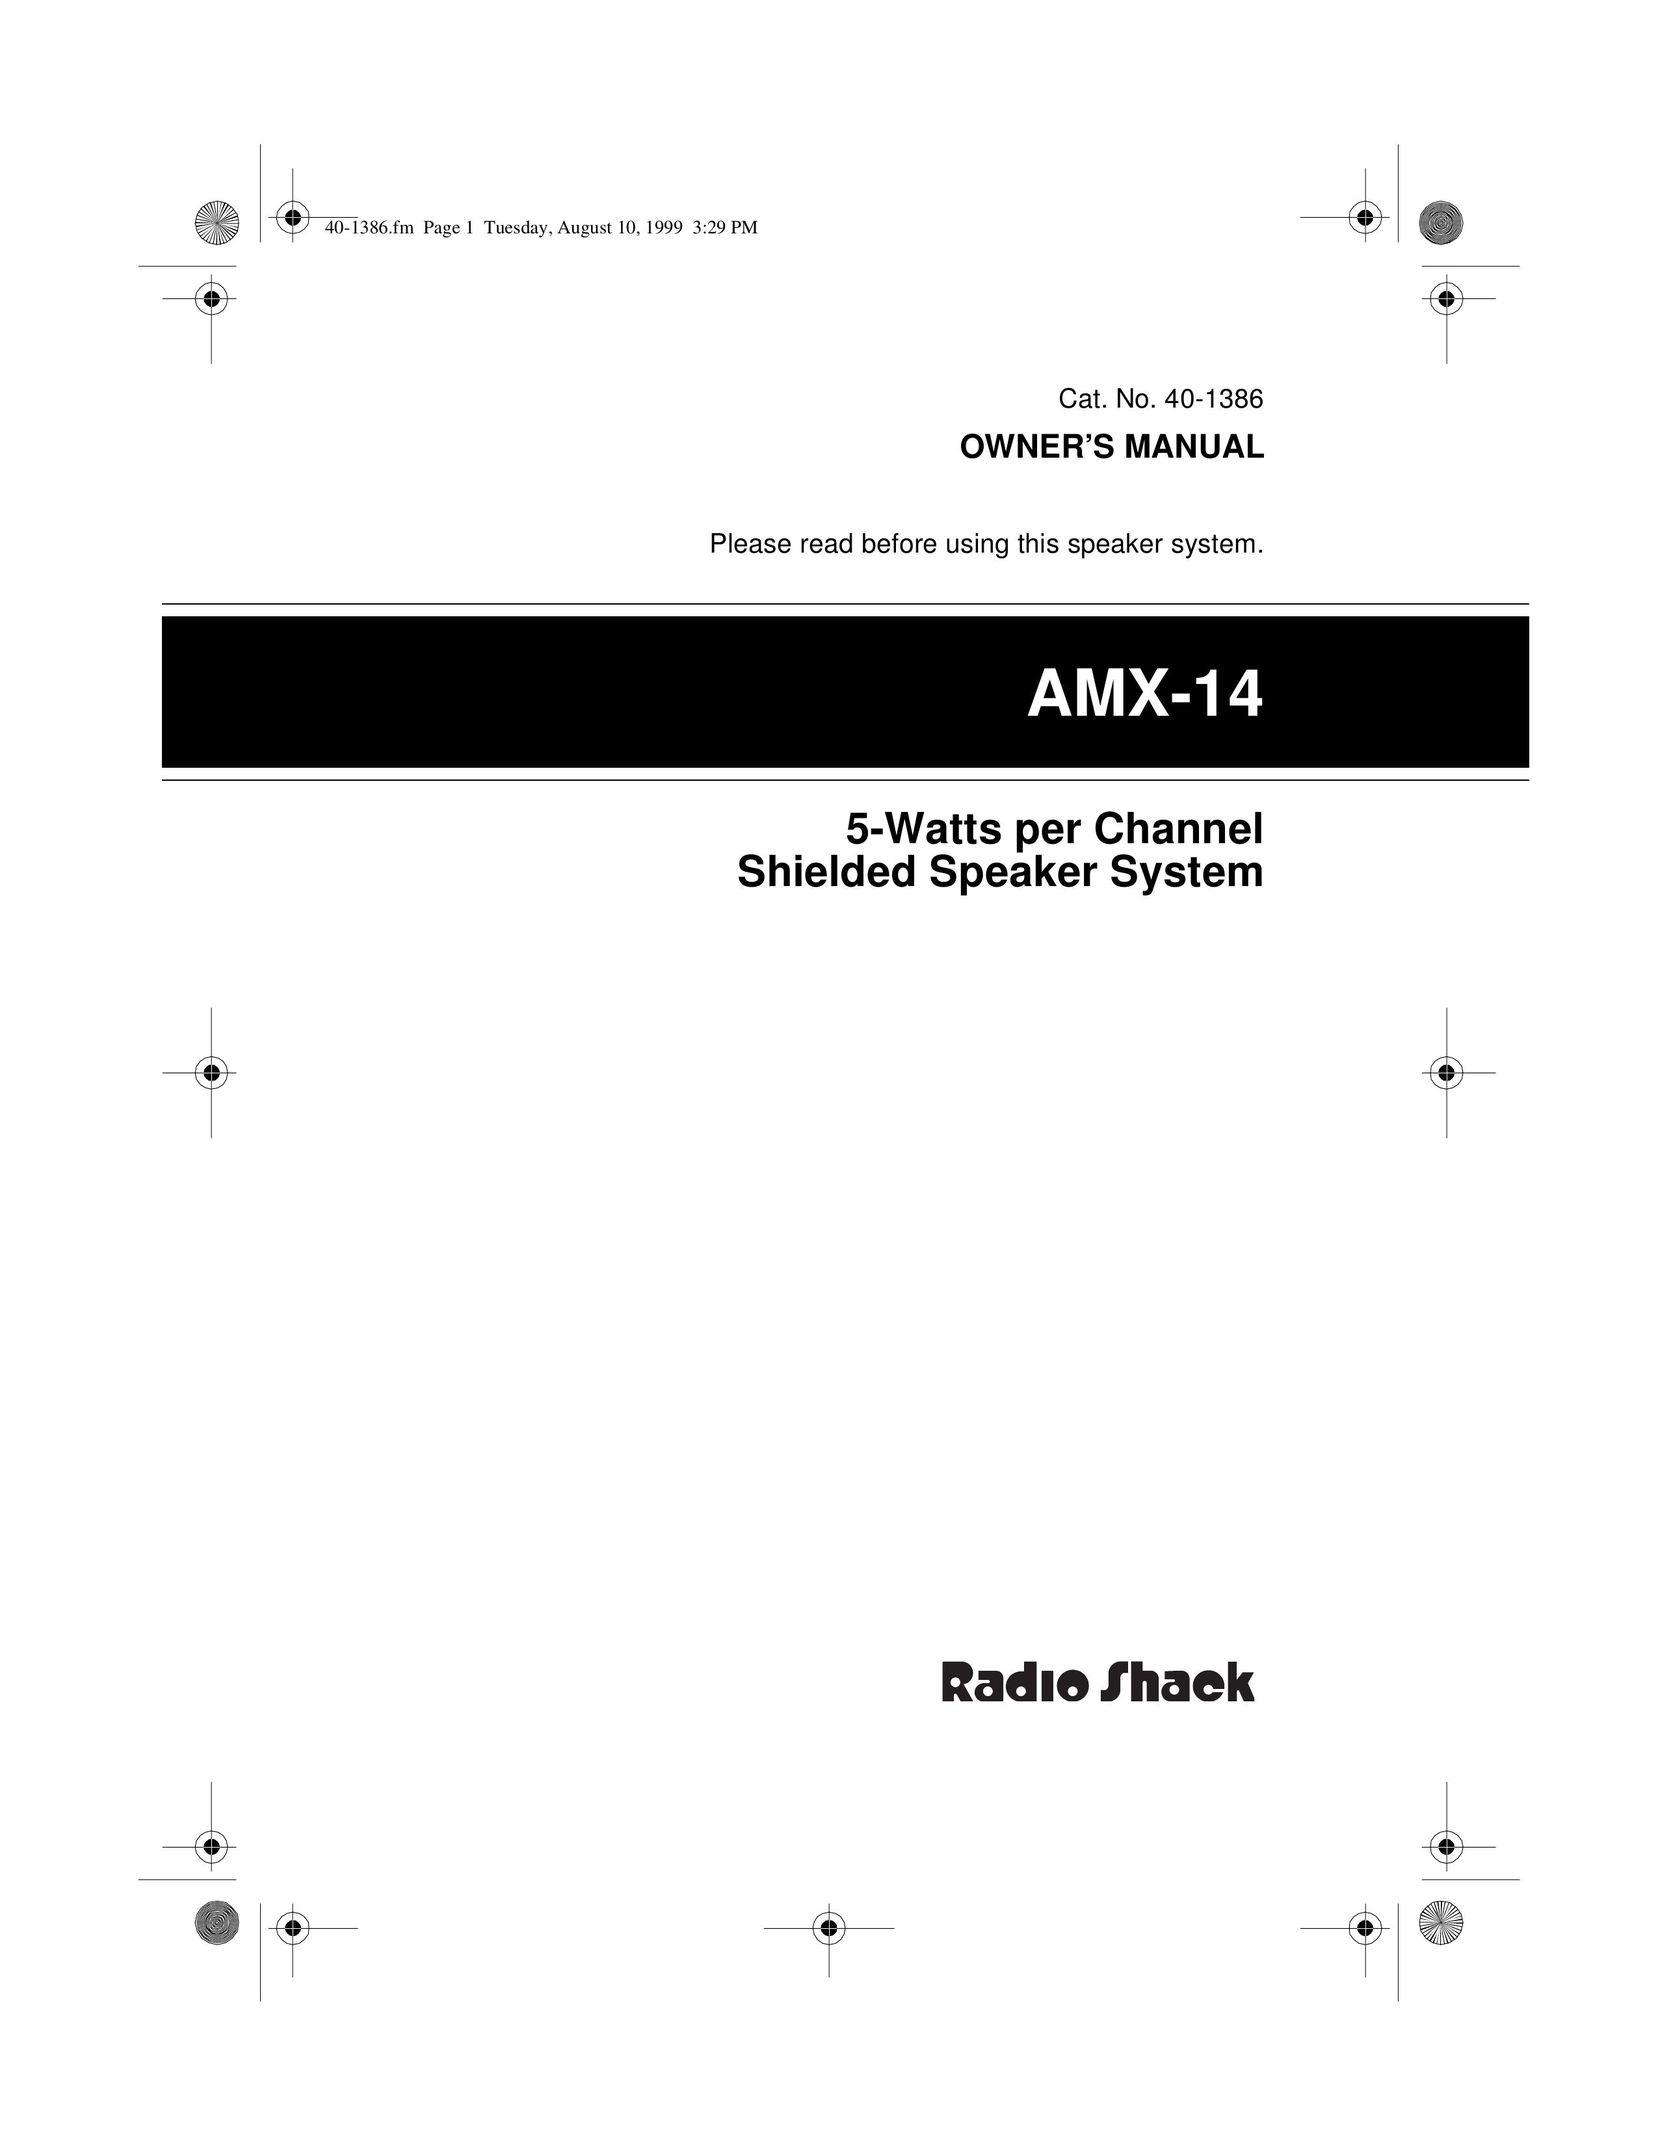 Radio Shack AMX-14 Speaker System User Manual